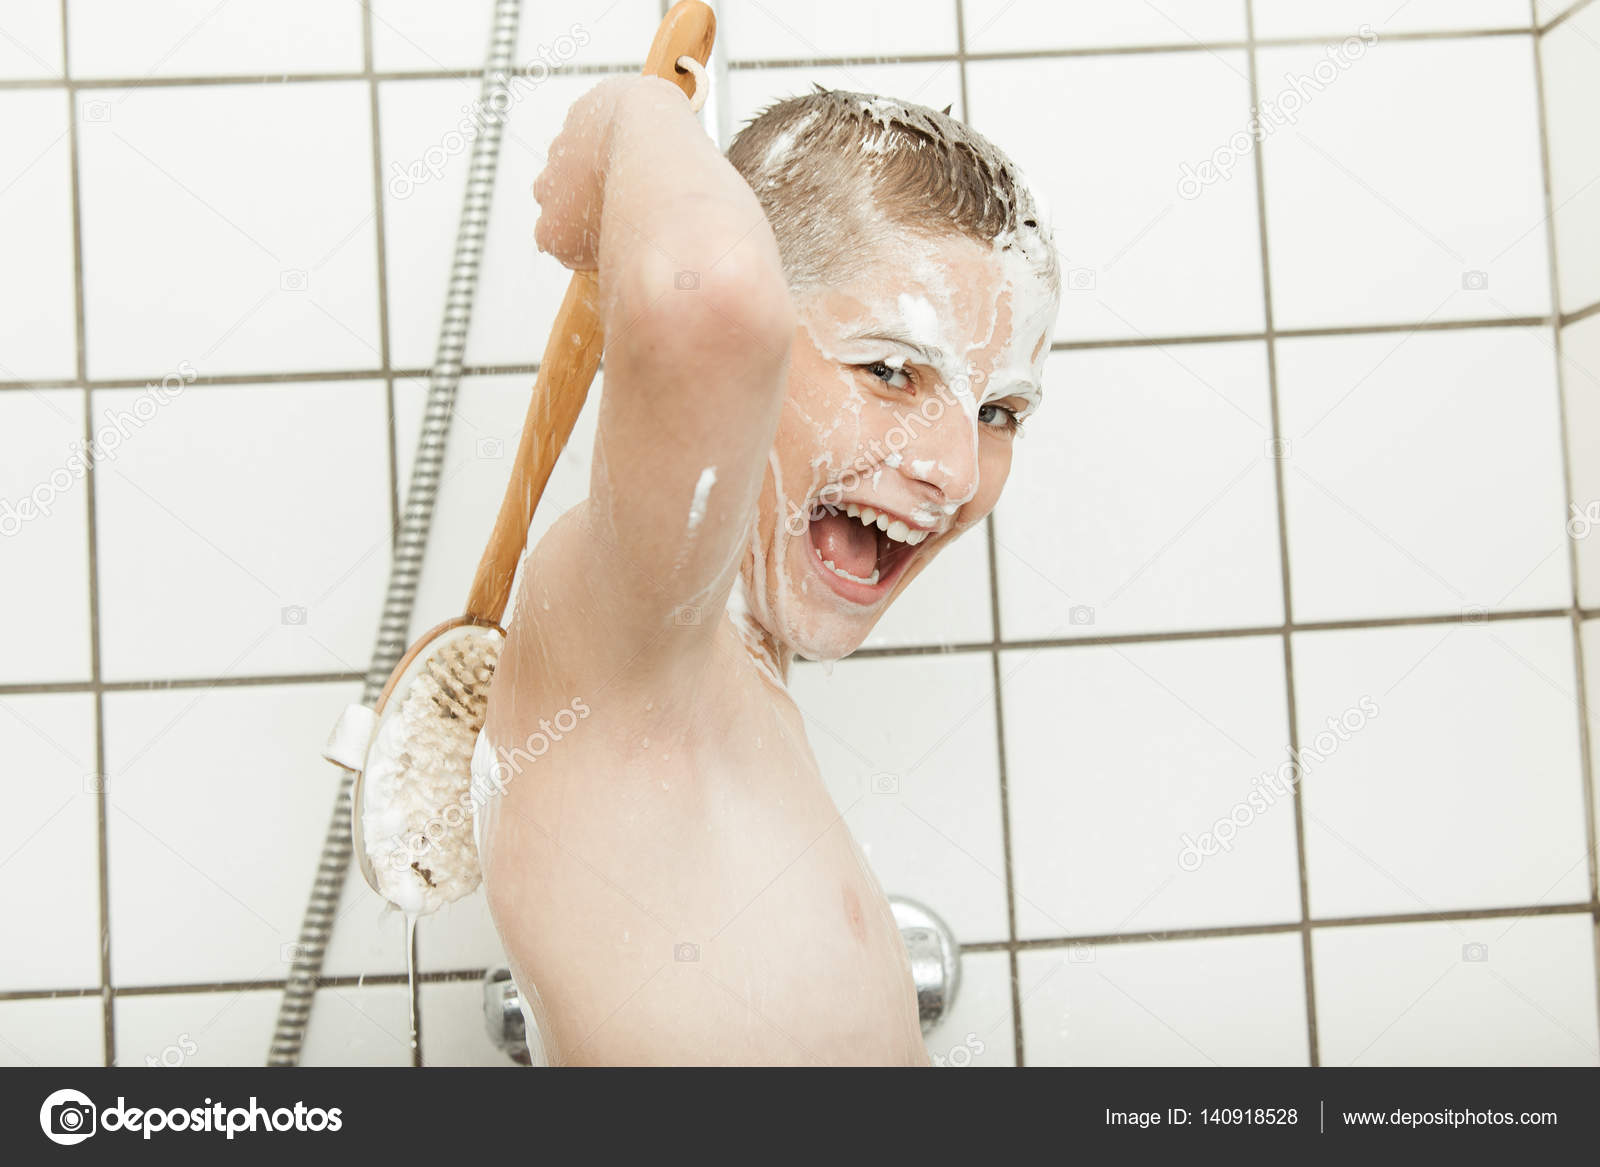 Very in shower. Намыливать мальчика.